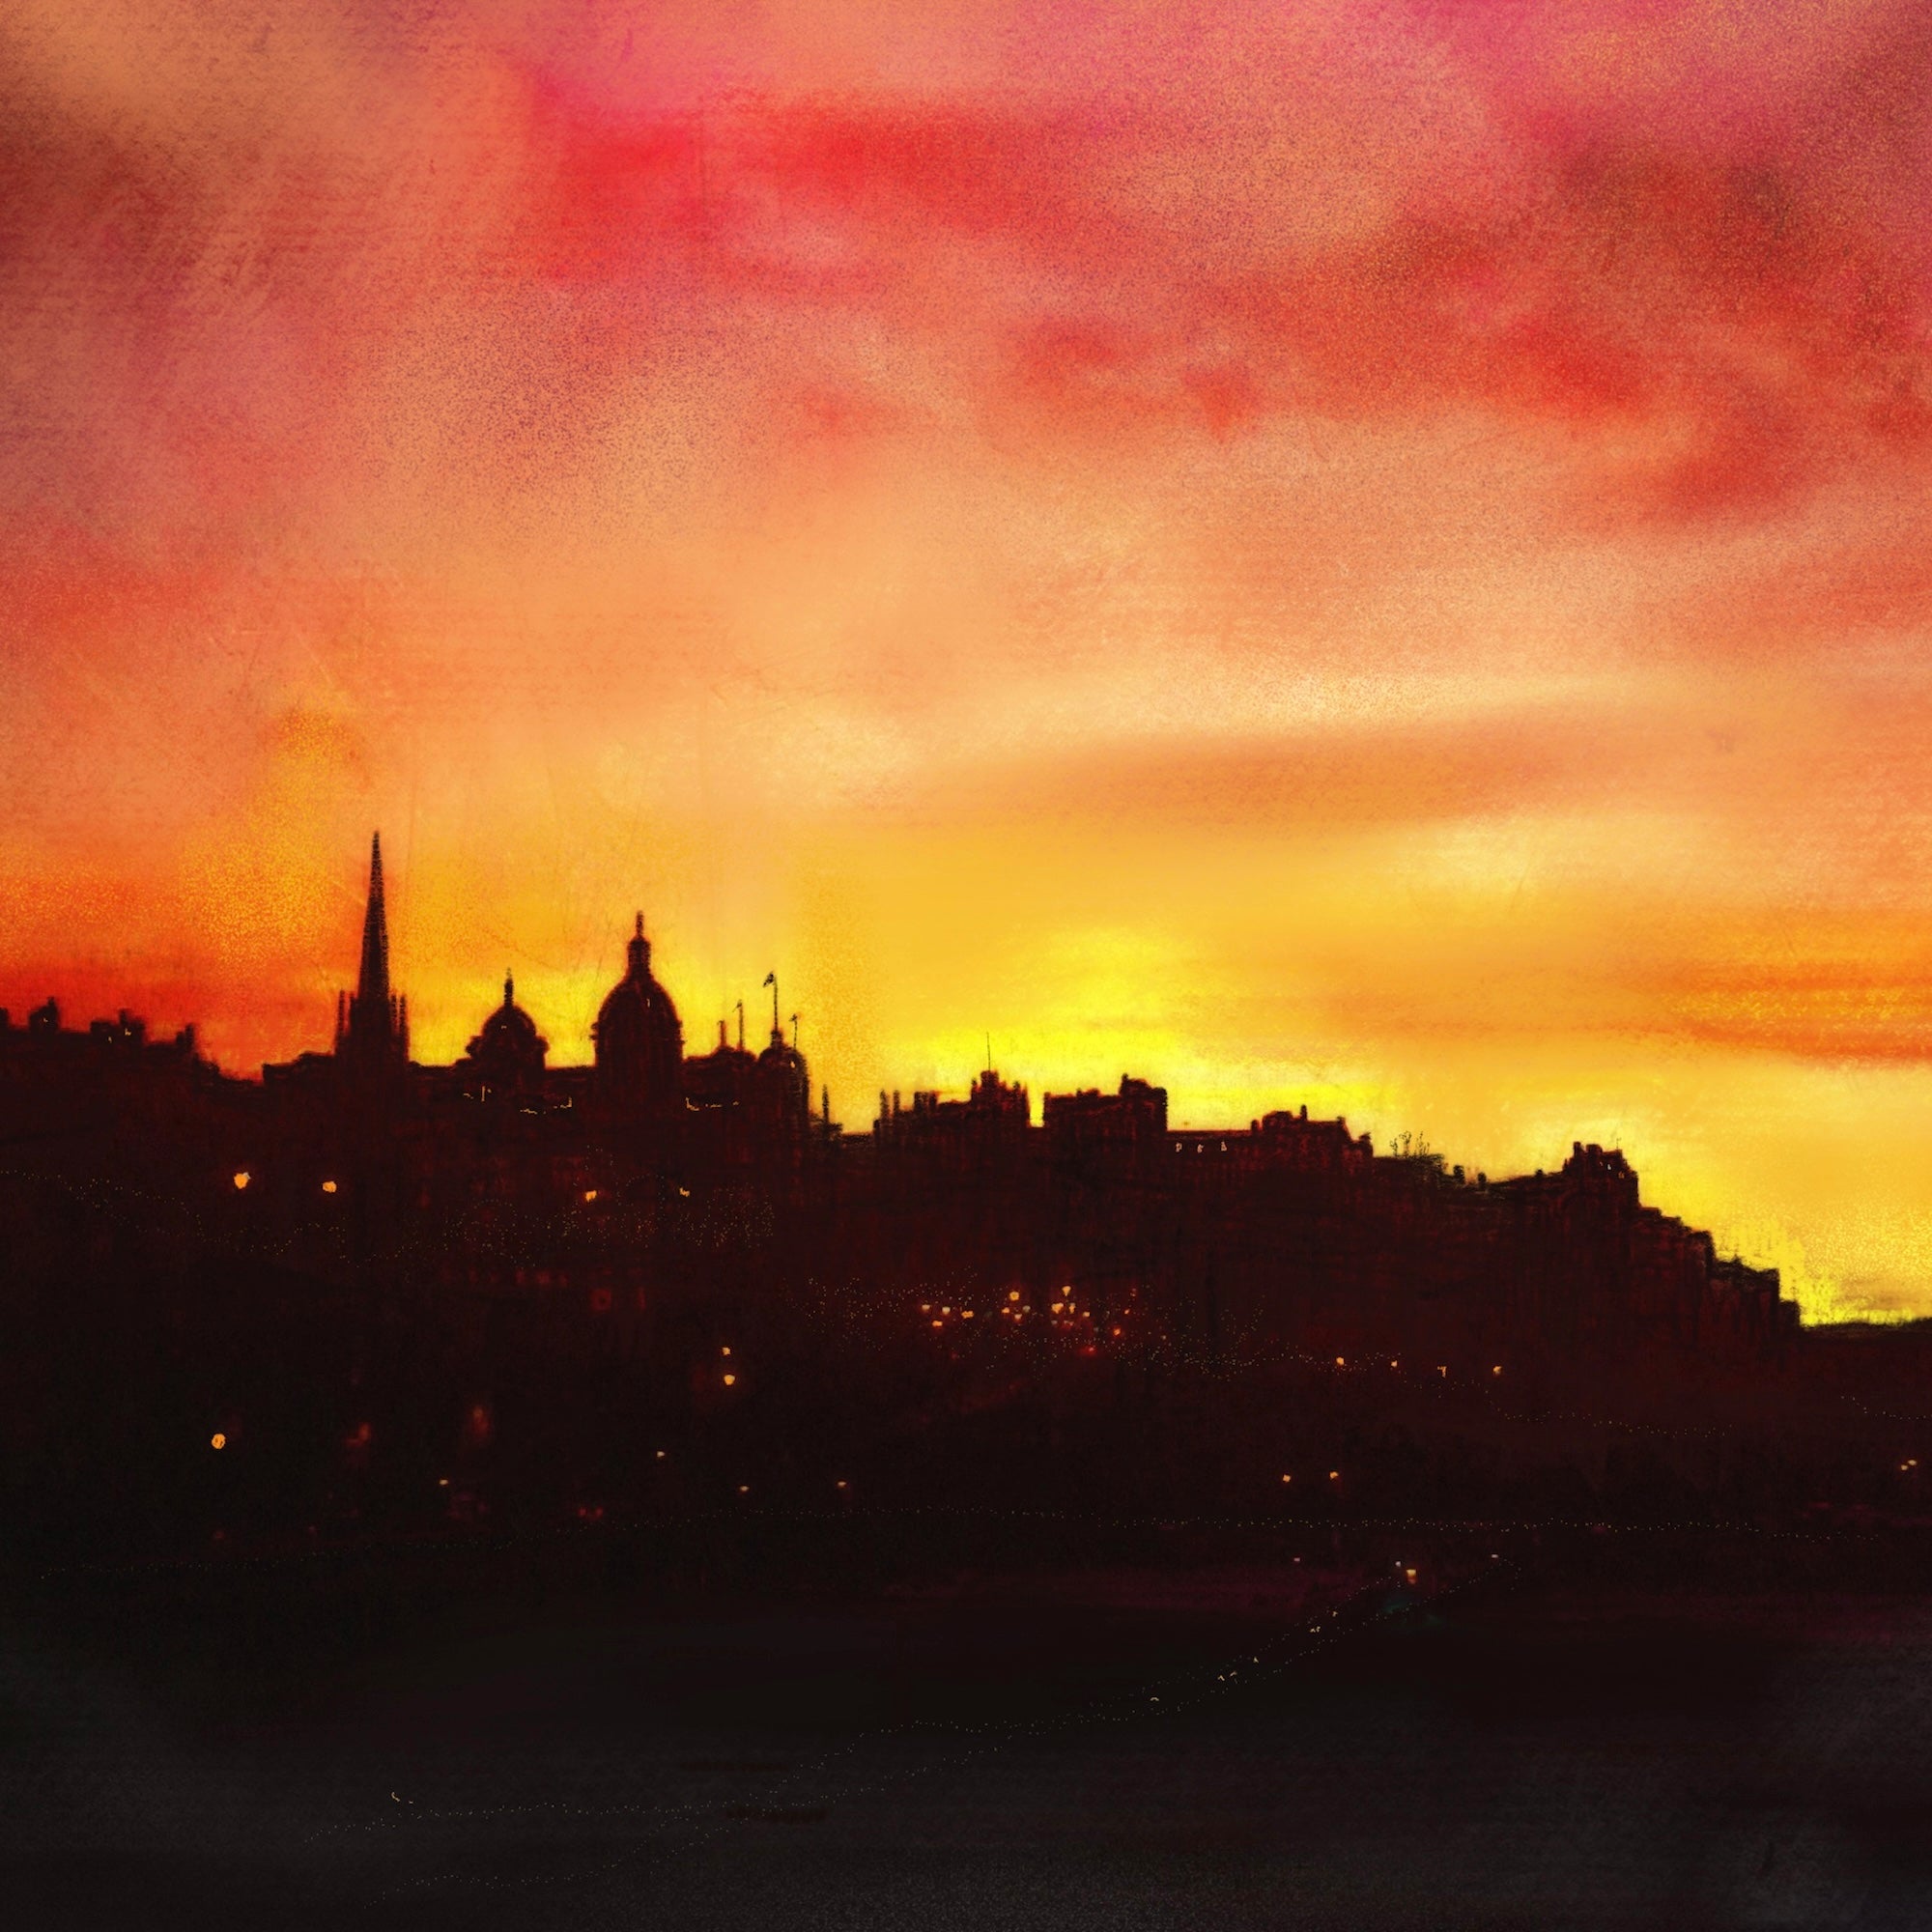 Edinburgh Sunset | Scotland In Your Pocket Art Print-Scotland In Your Pocket Framed Prints-Edinburgh & Glasgow Art Gallery-Paintings, Prints, Homeware, Art Gifts From Scotland By Scottish Artist Kevin Hunter